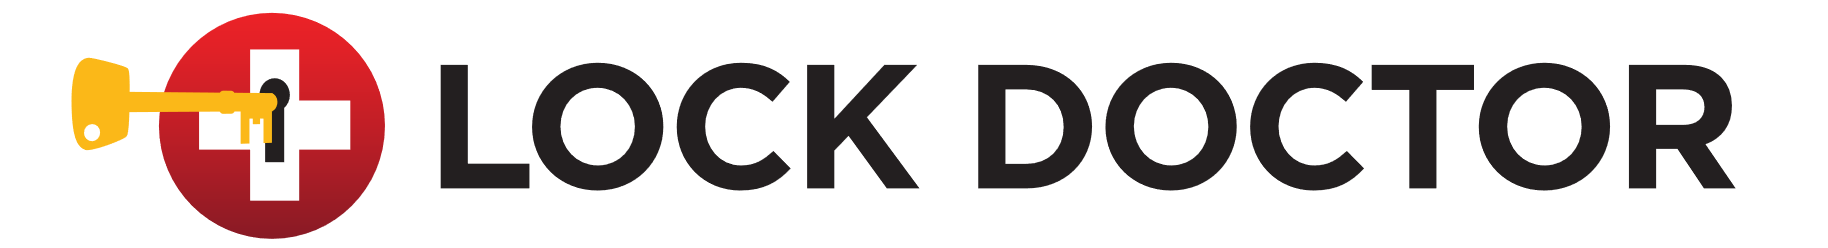 lockdoctor logo